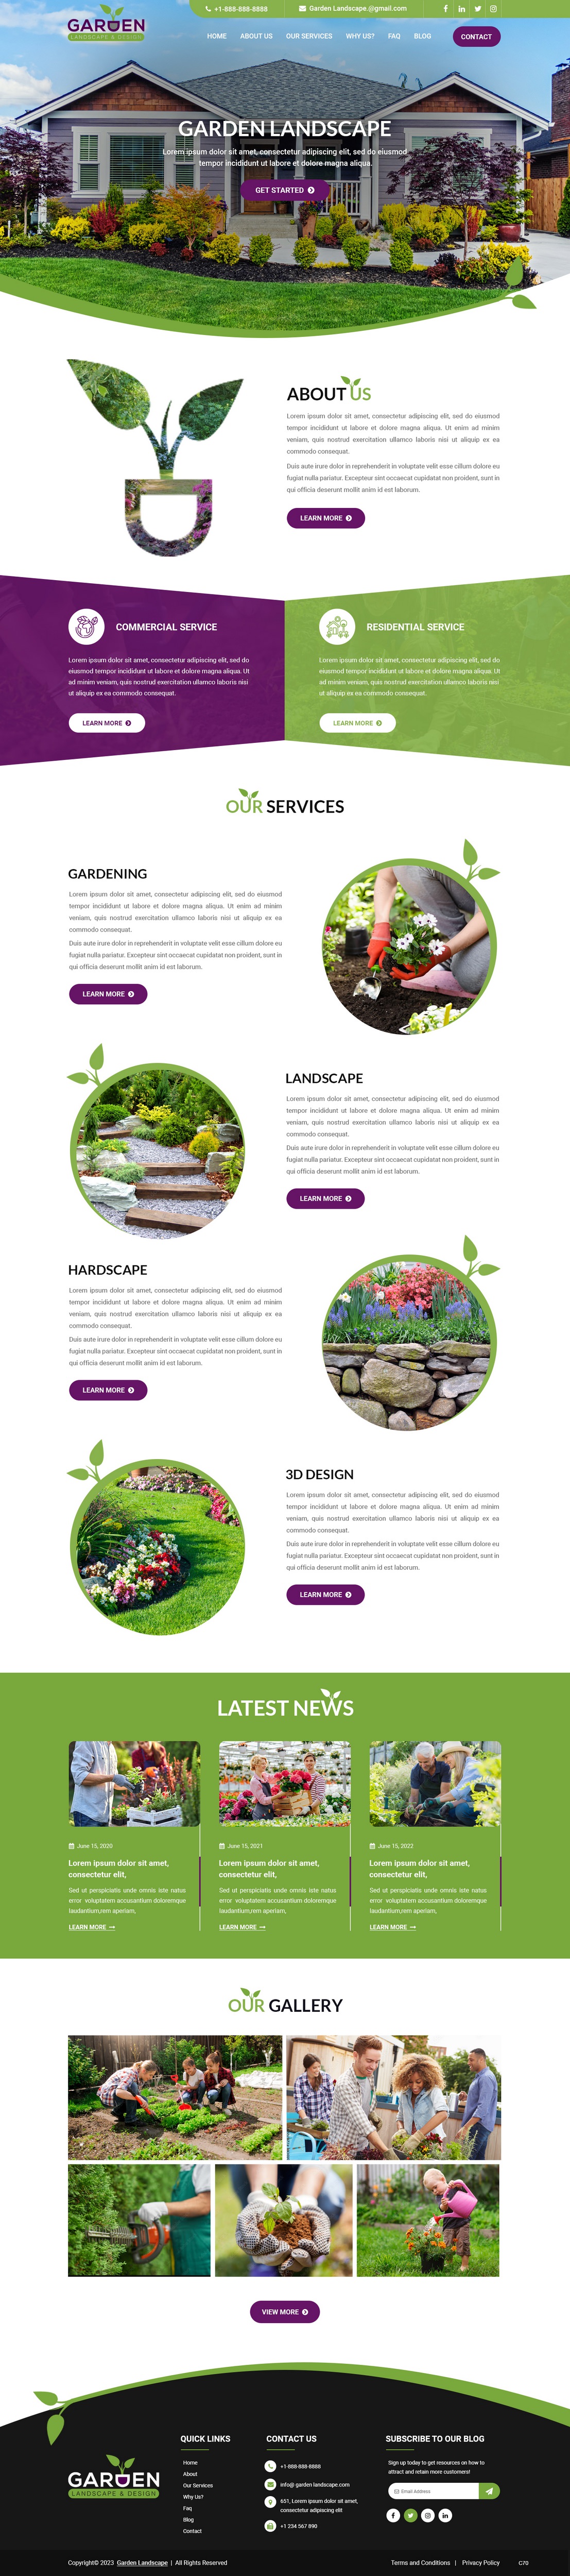 Landscape Contractor website design example